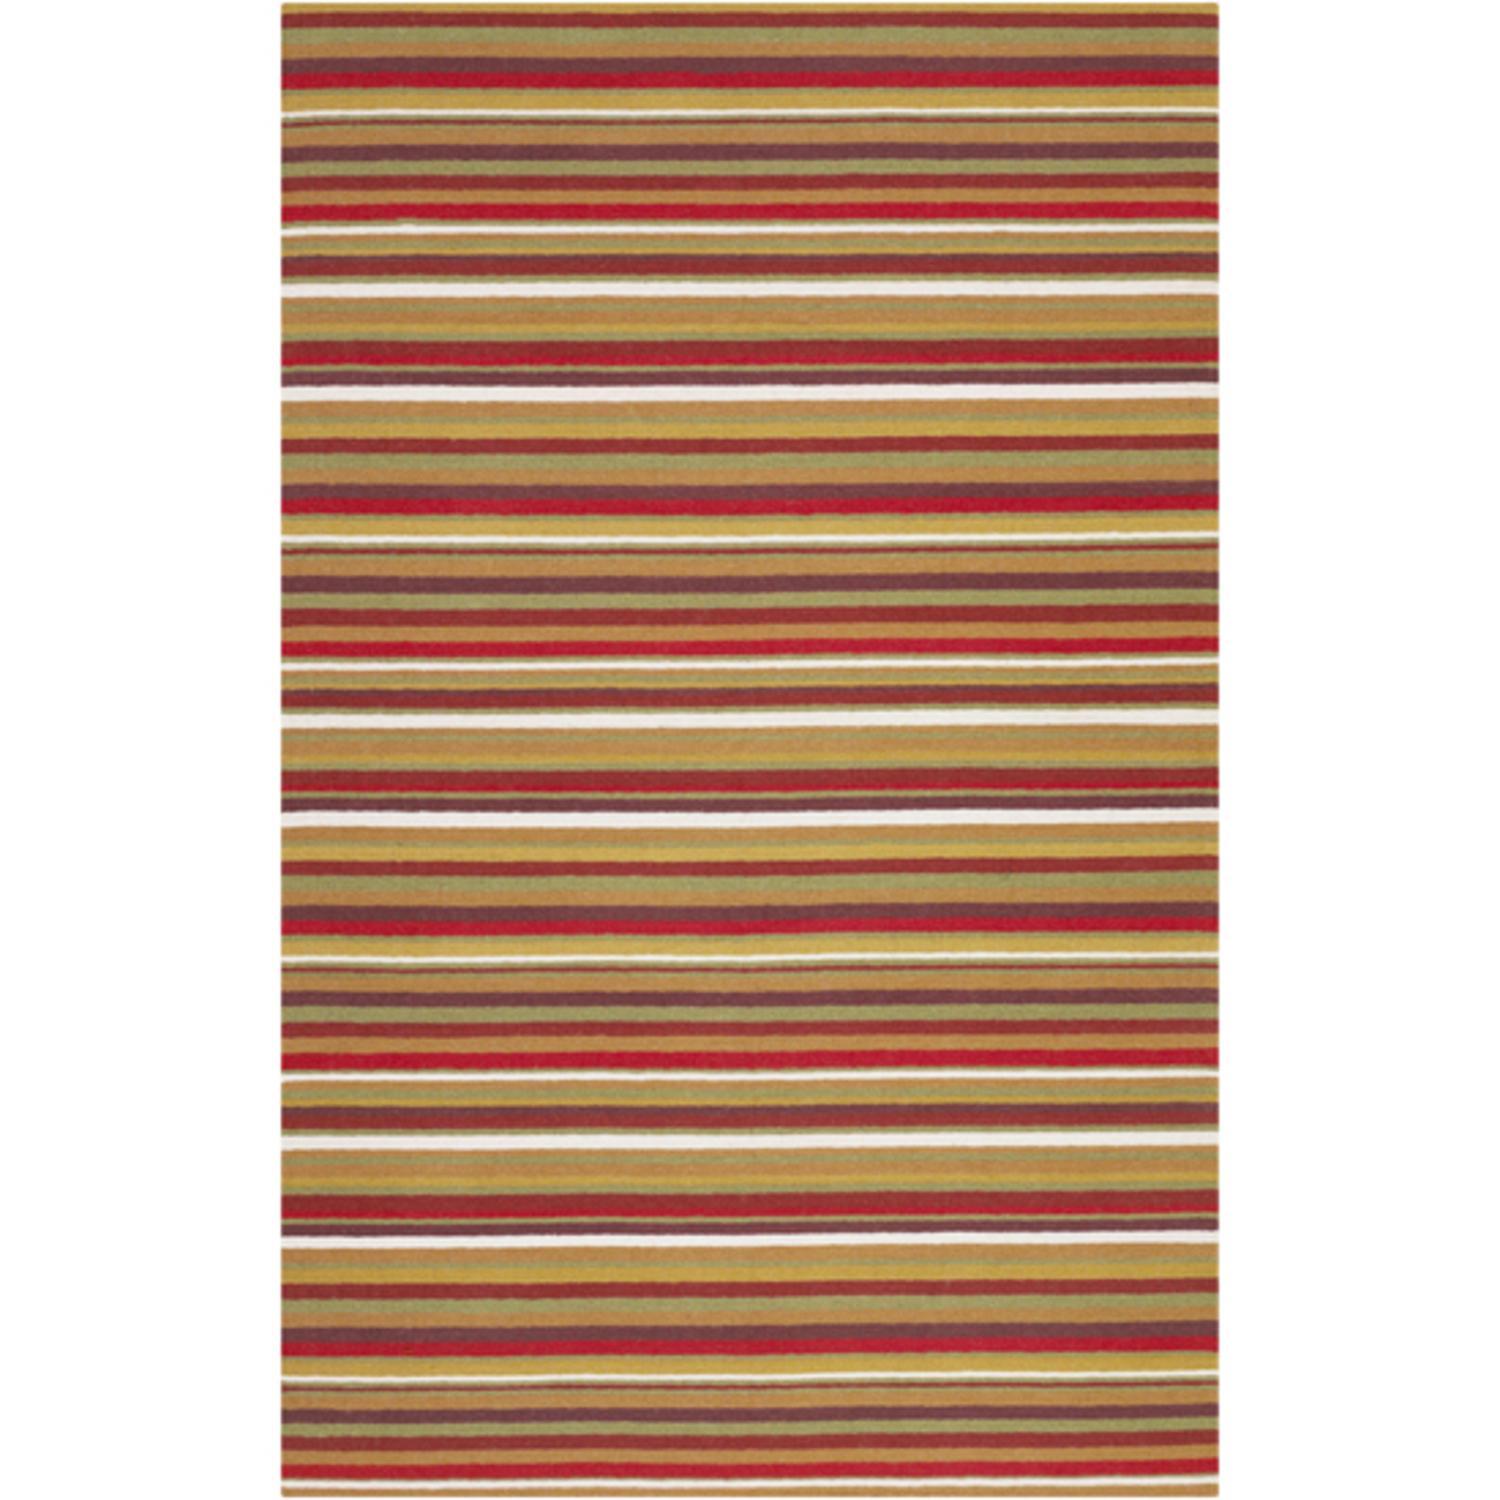 CC Home Furnishings 8' x 11' Rainbow Stripes Golden Raisin and Wine Wool Area Throw Rug